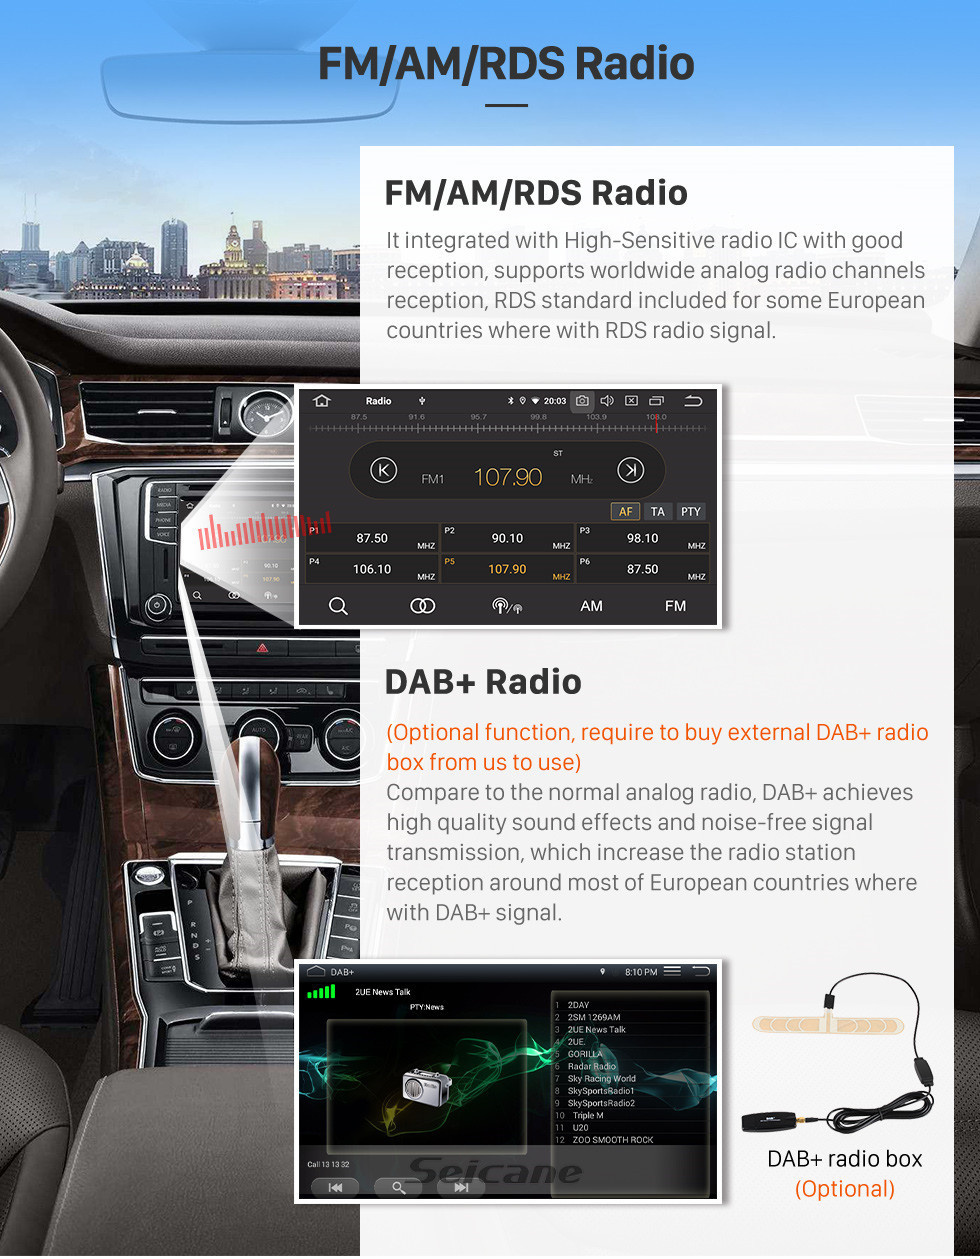 Seicane 9 zoll Für 2009 Hyundai Sonata Handbuch A / C Radio Android 11.0 GPS Navigationssystem Bluetooth HD Touchscreen Carplay unterstützung Digital TV